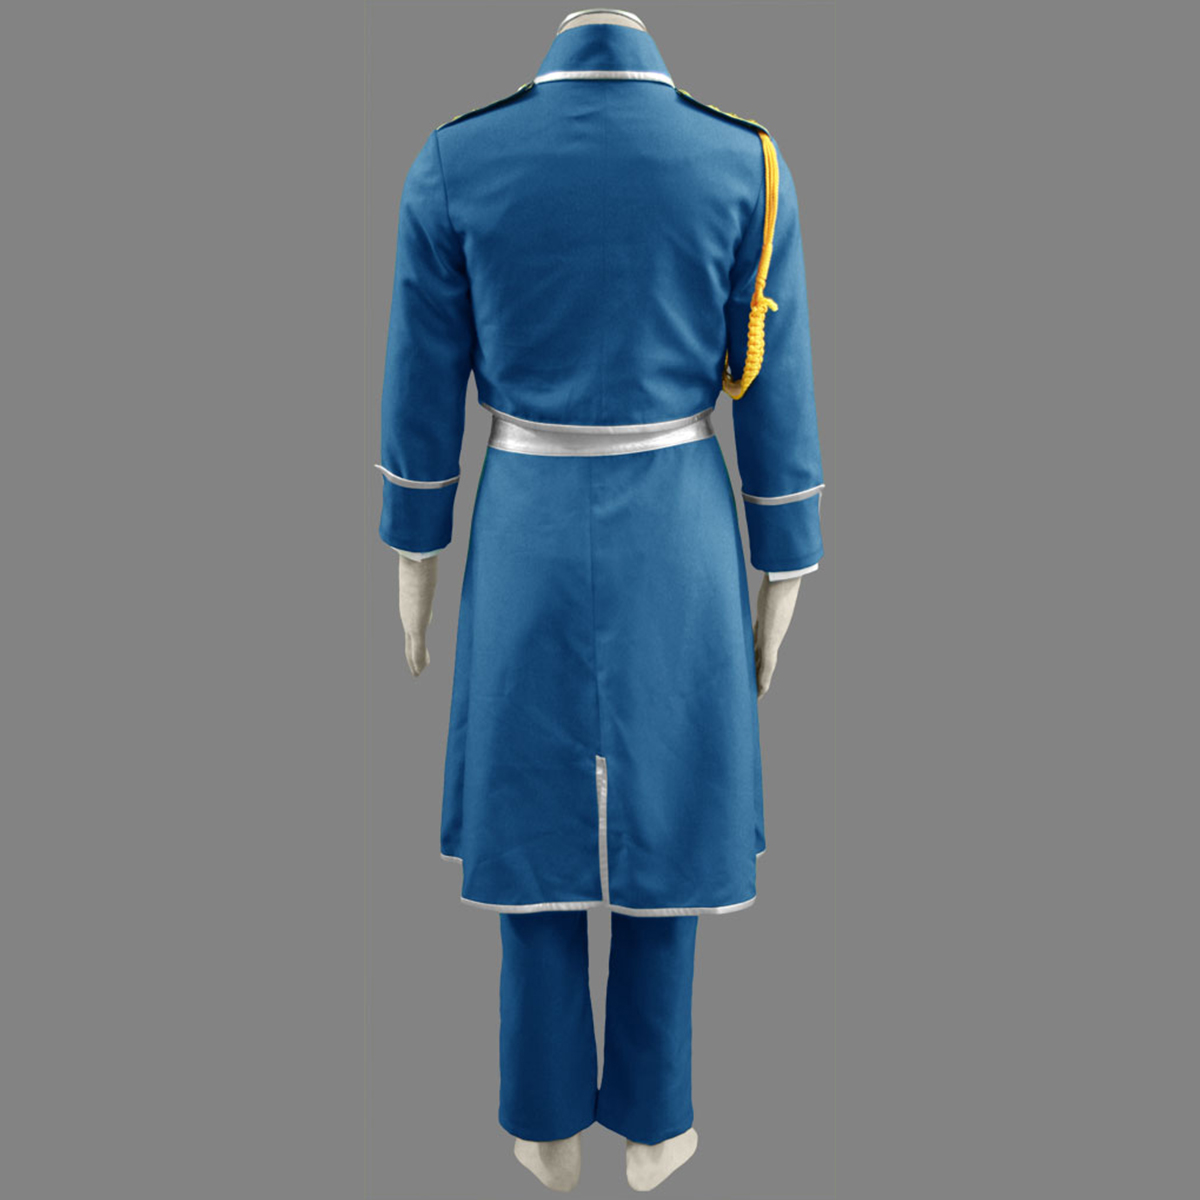 Fullmetal Alchemist Male Military Uniform Cosplay Kostym Sverige